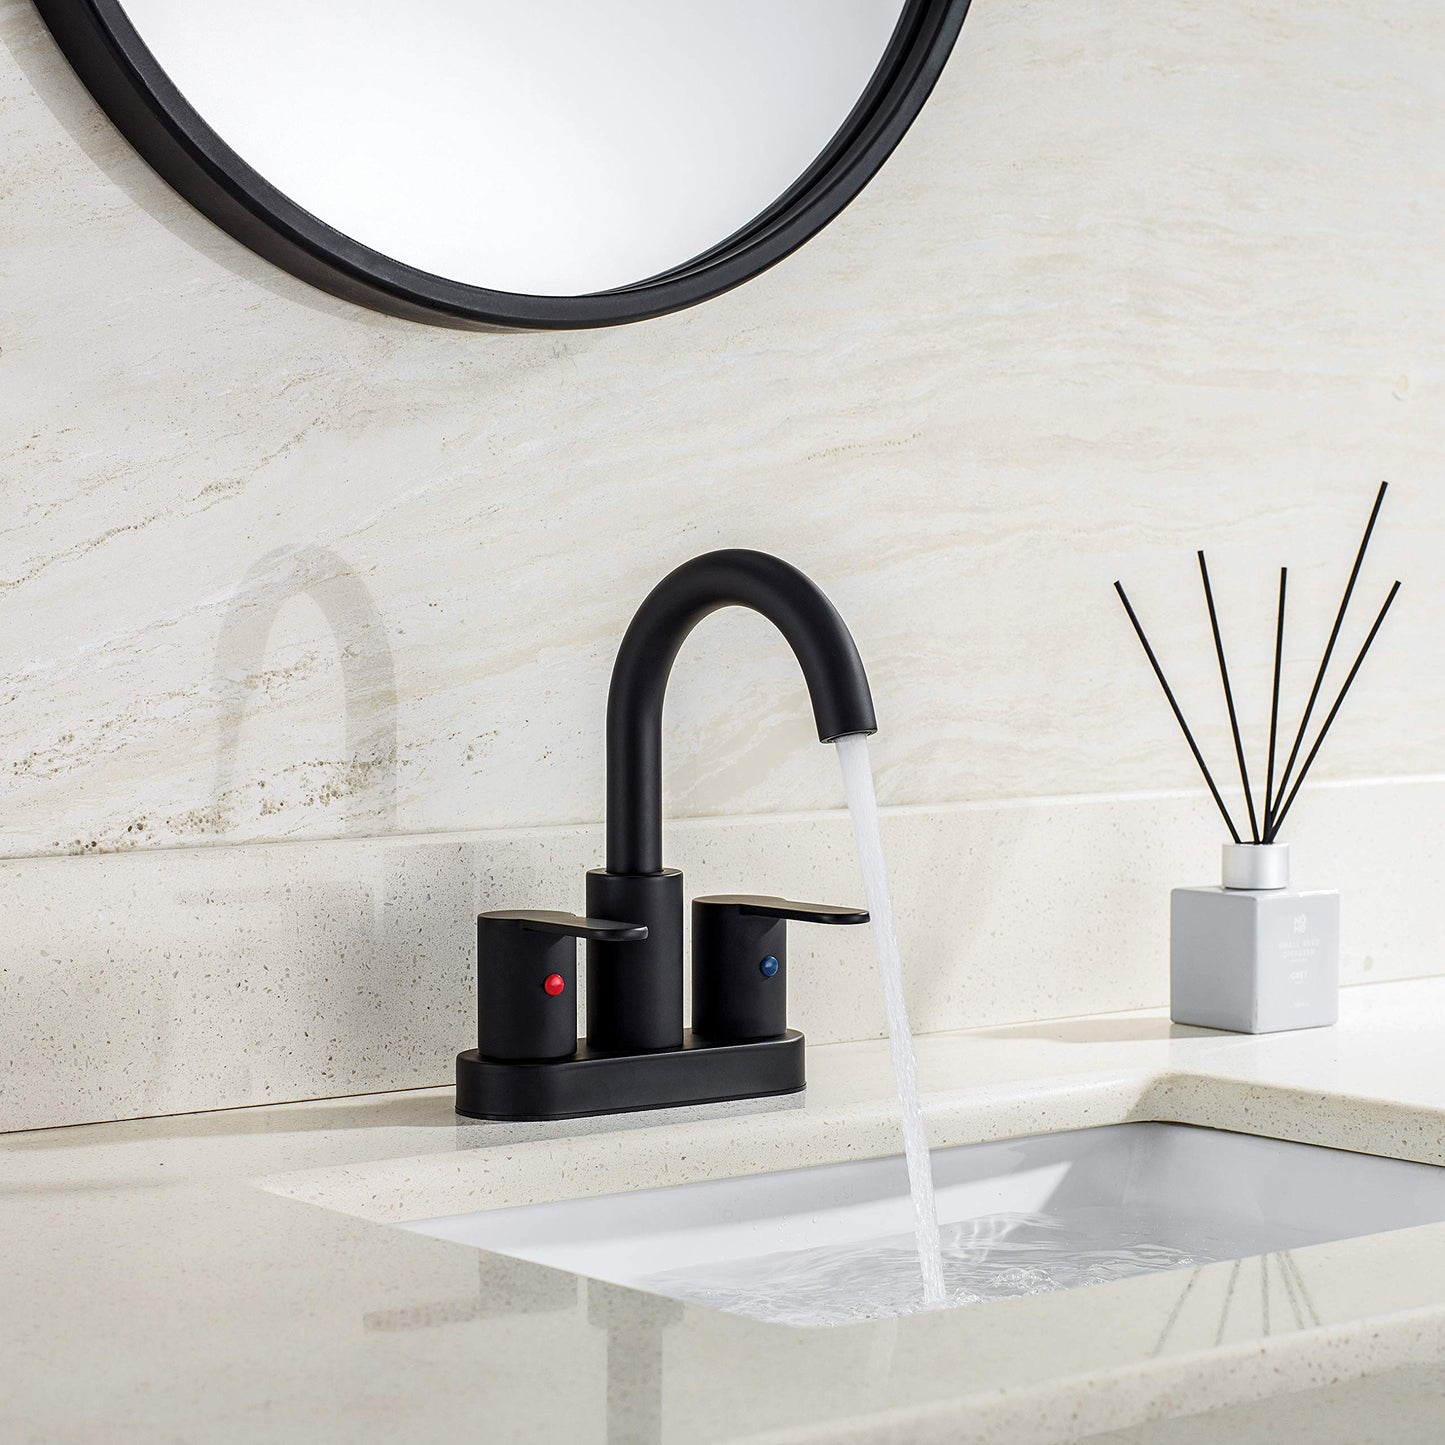 4 Inch Matte Black Bathroom Centerset Faucet with Pop-up Drain